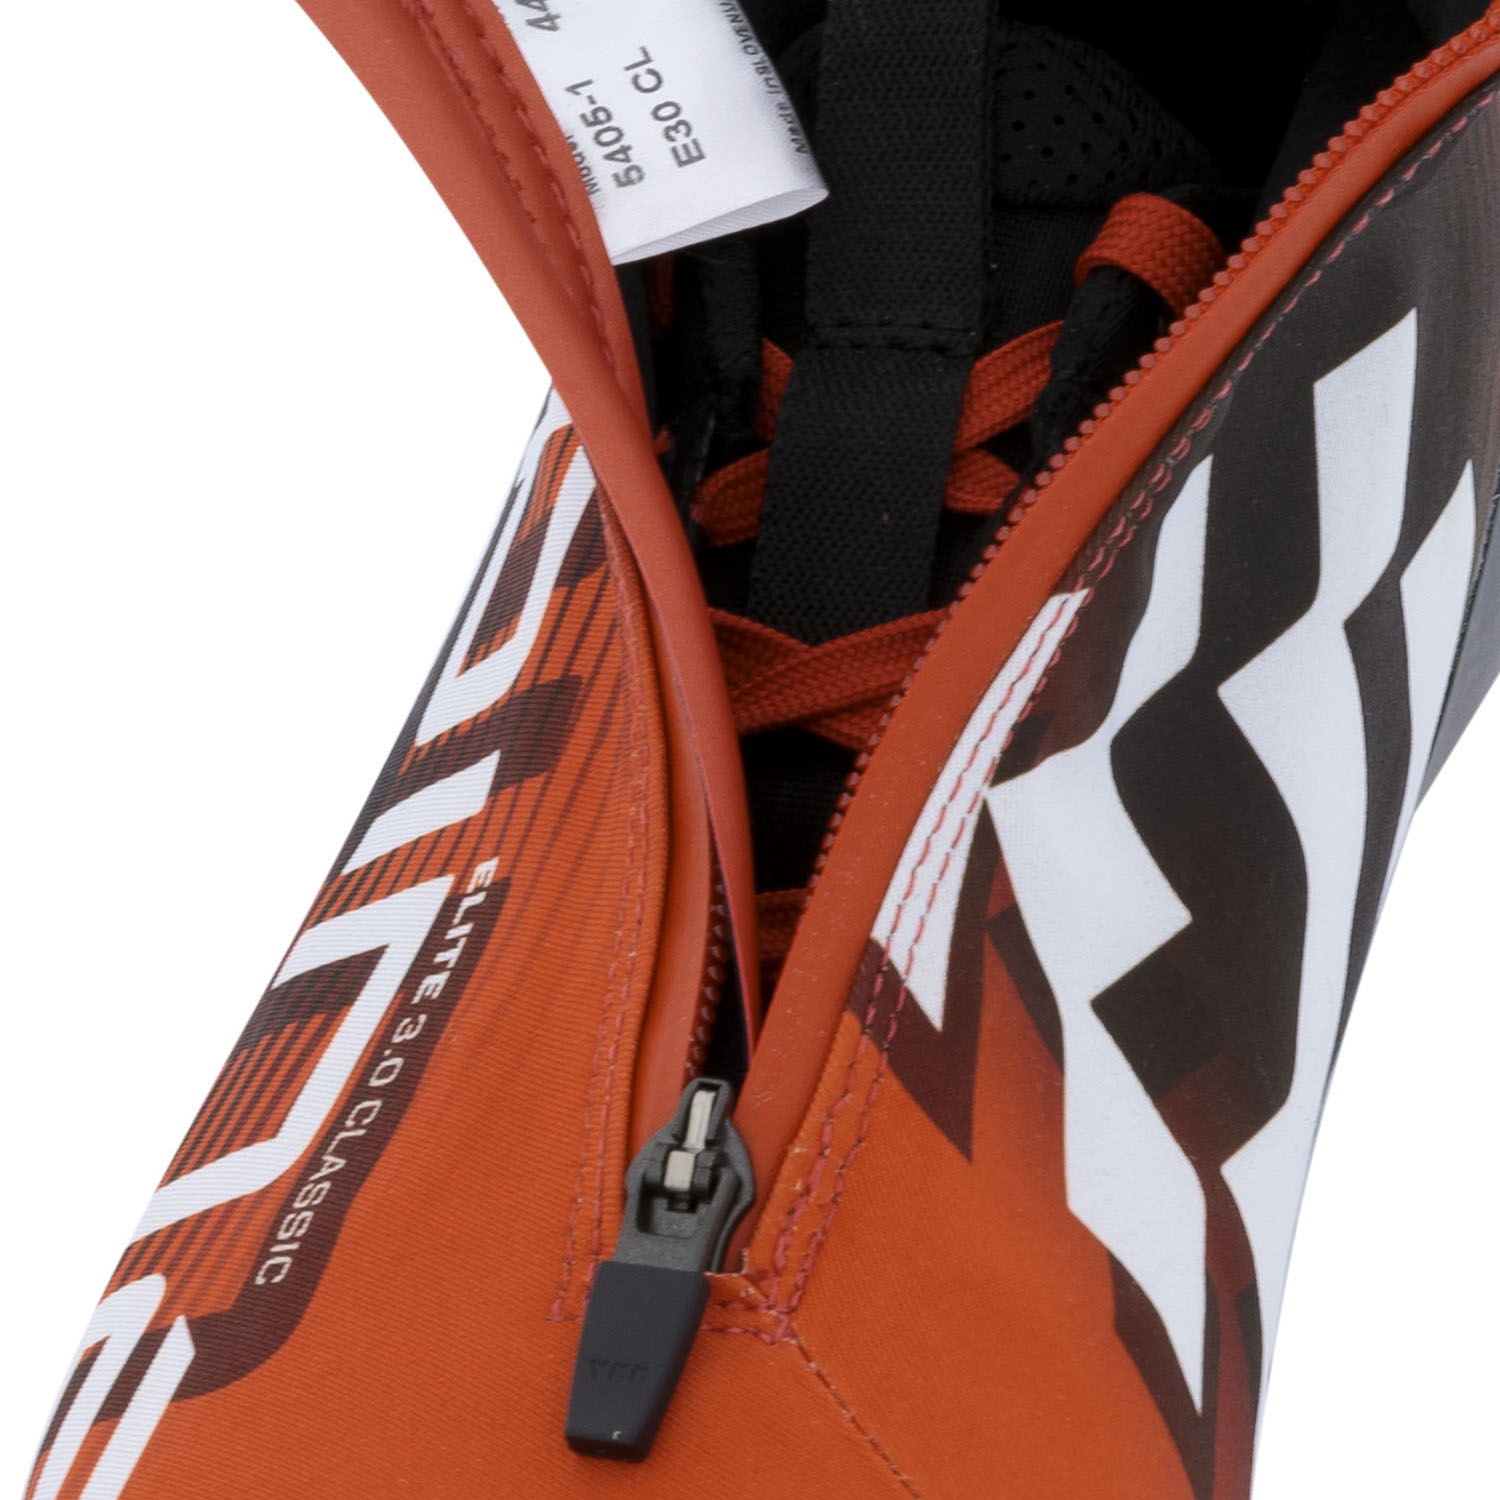 Лыжные ботинки Alpina. E30 CL Red/Black/White